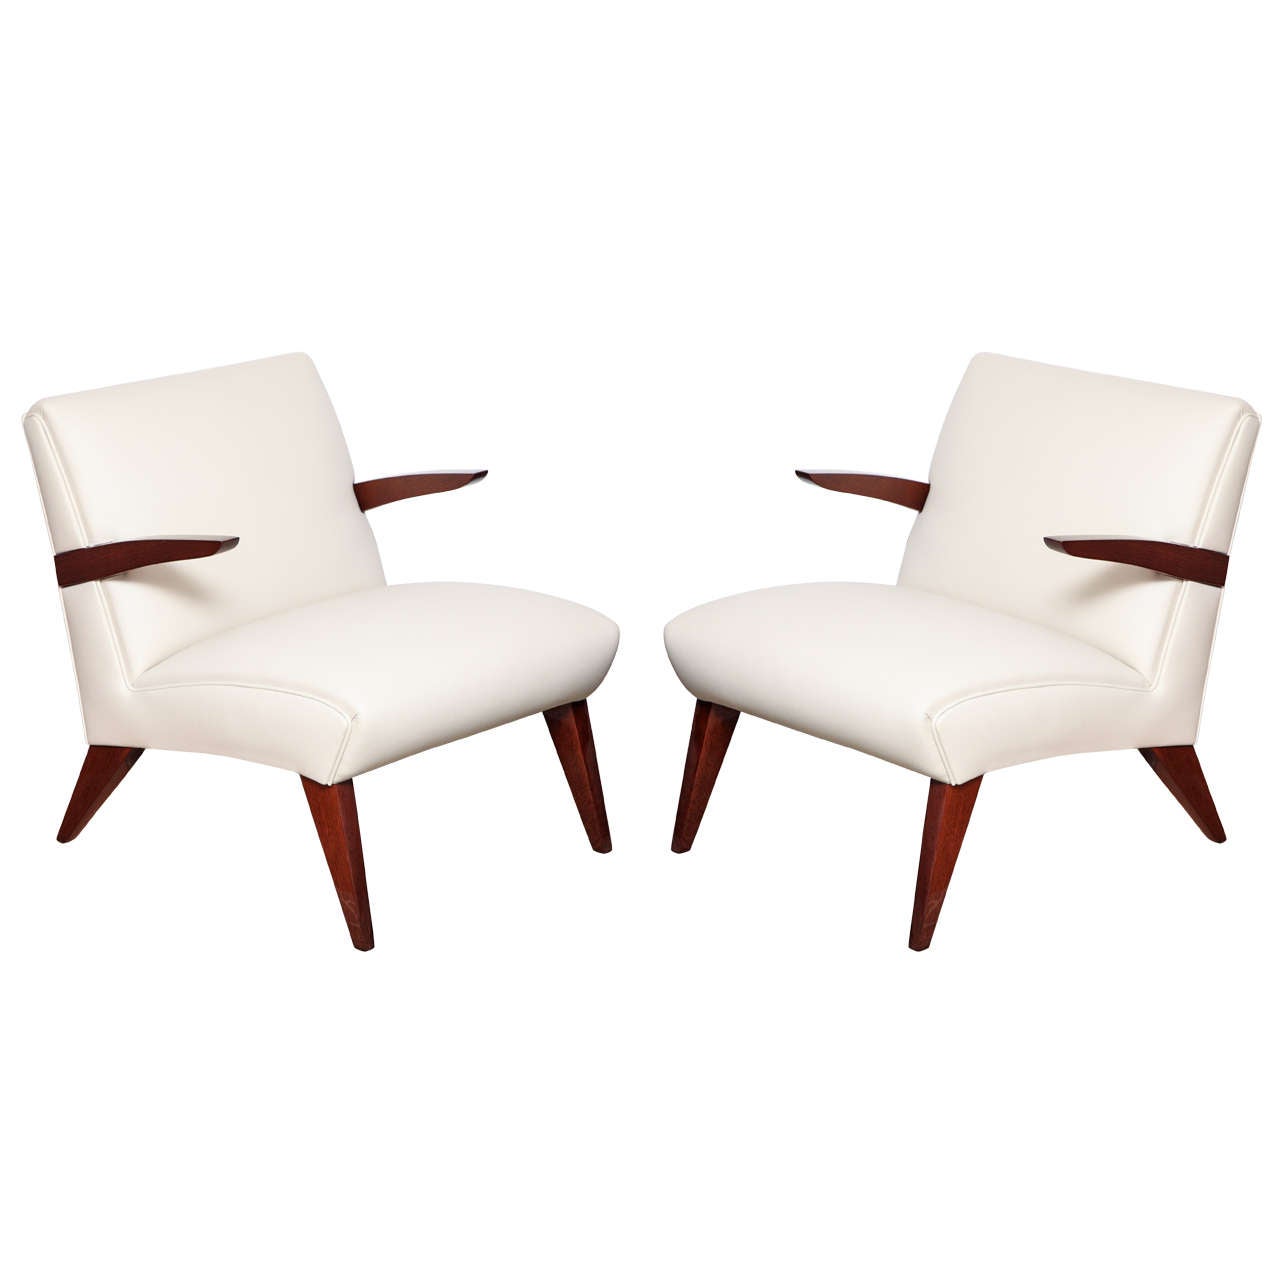 Pair of Art Deco Streamline Lounge Chairs